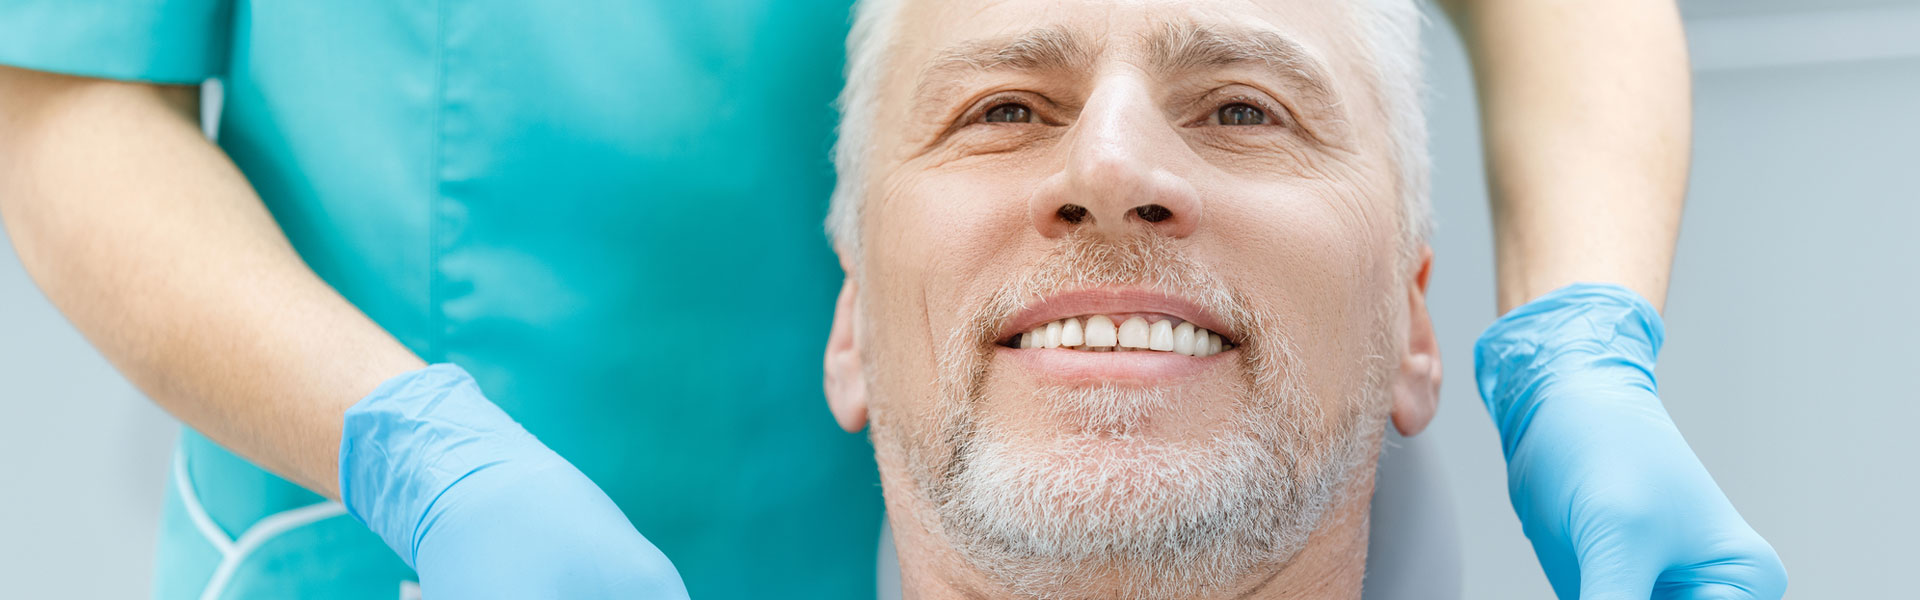 A man getting ready for dental dental implants treatment